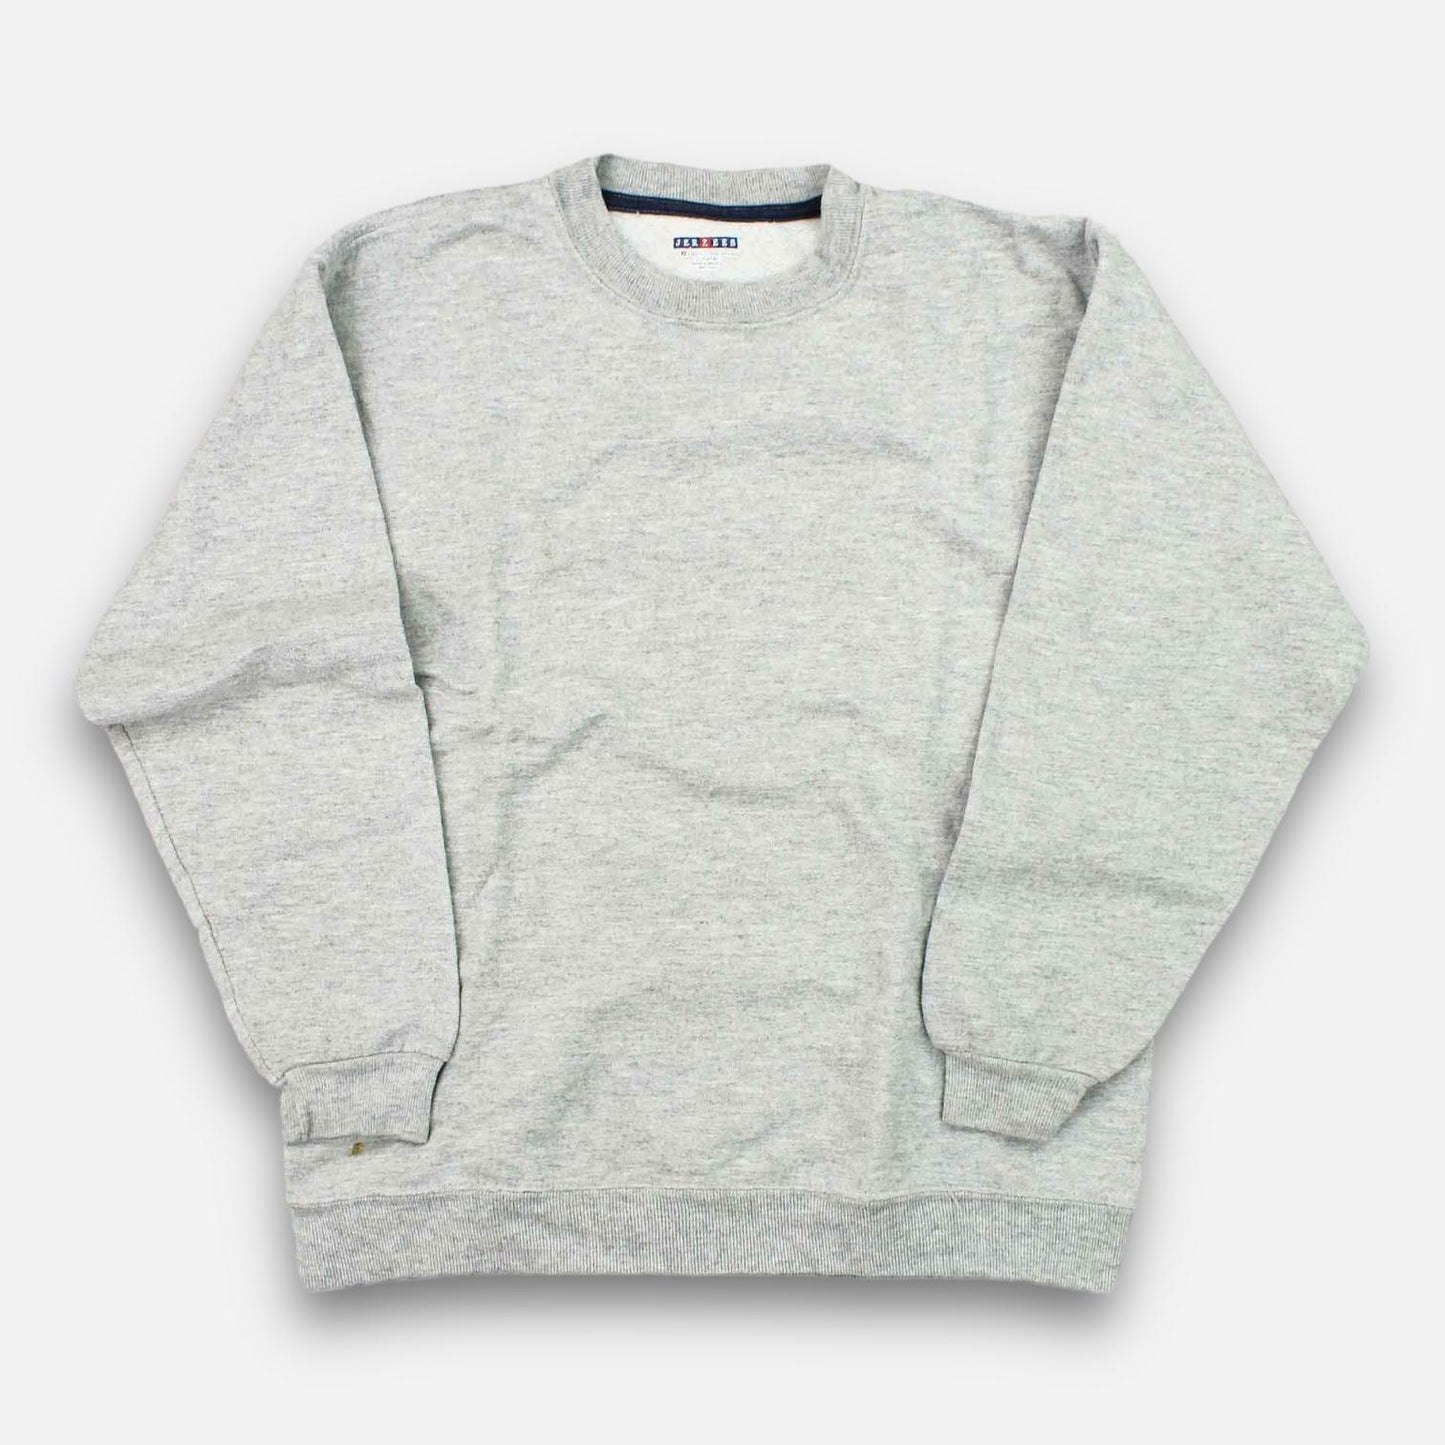 Vintage Basic Sweater Grau - XS